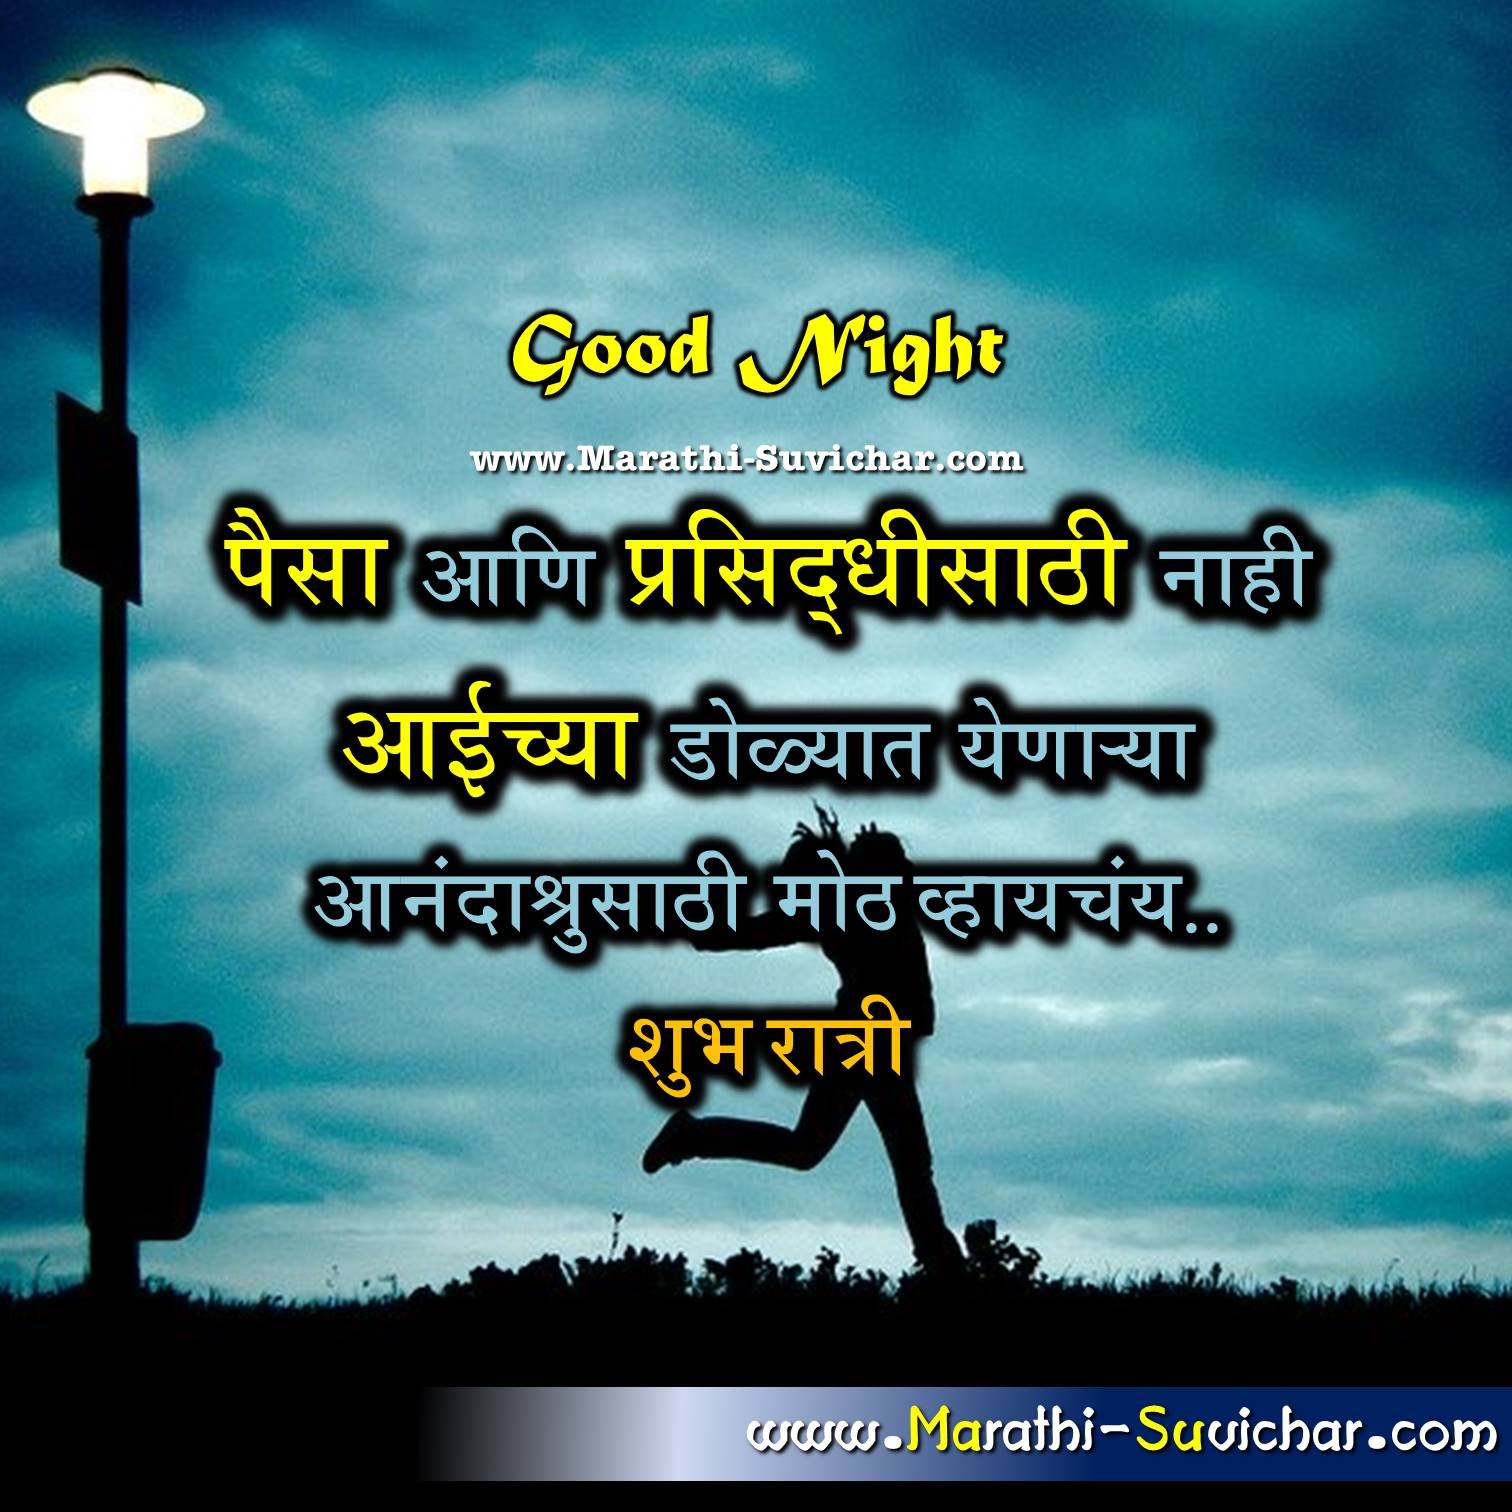 शुभ रात्रि मेसेजेस मराठी | Good Night Quotes in marathi - मराठी सुविचार